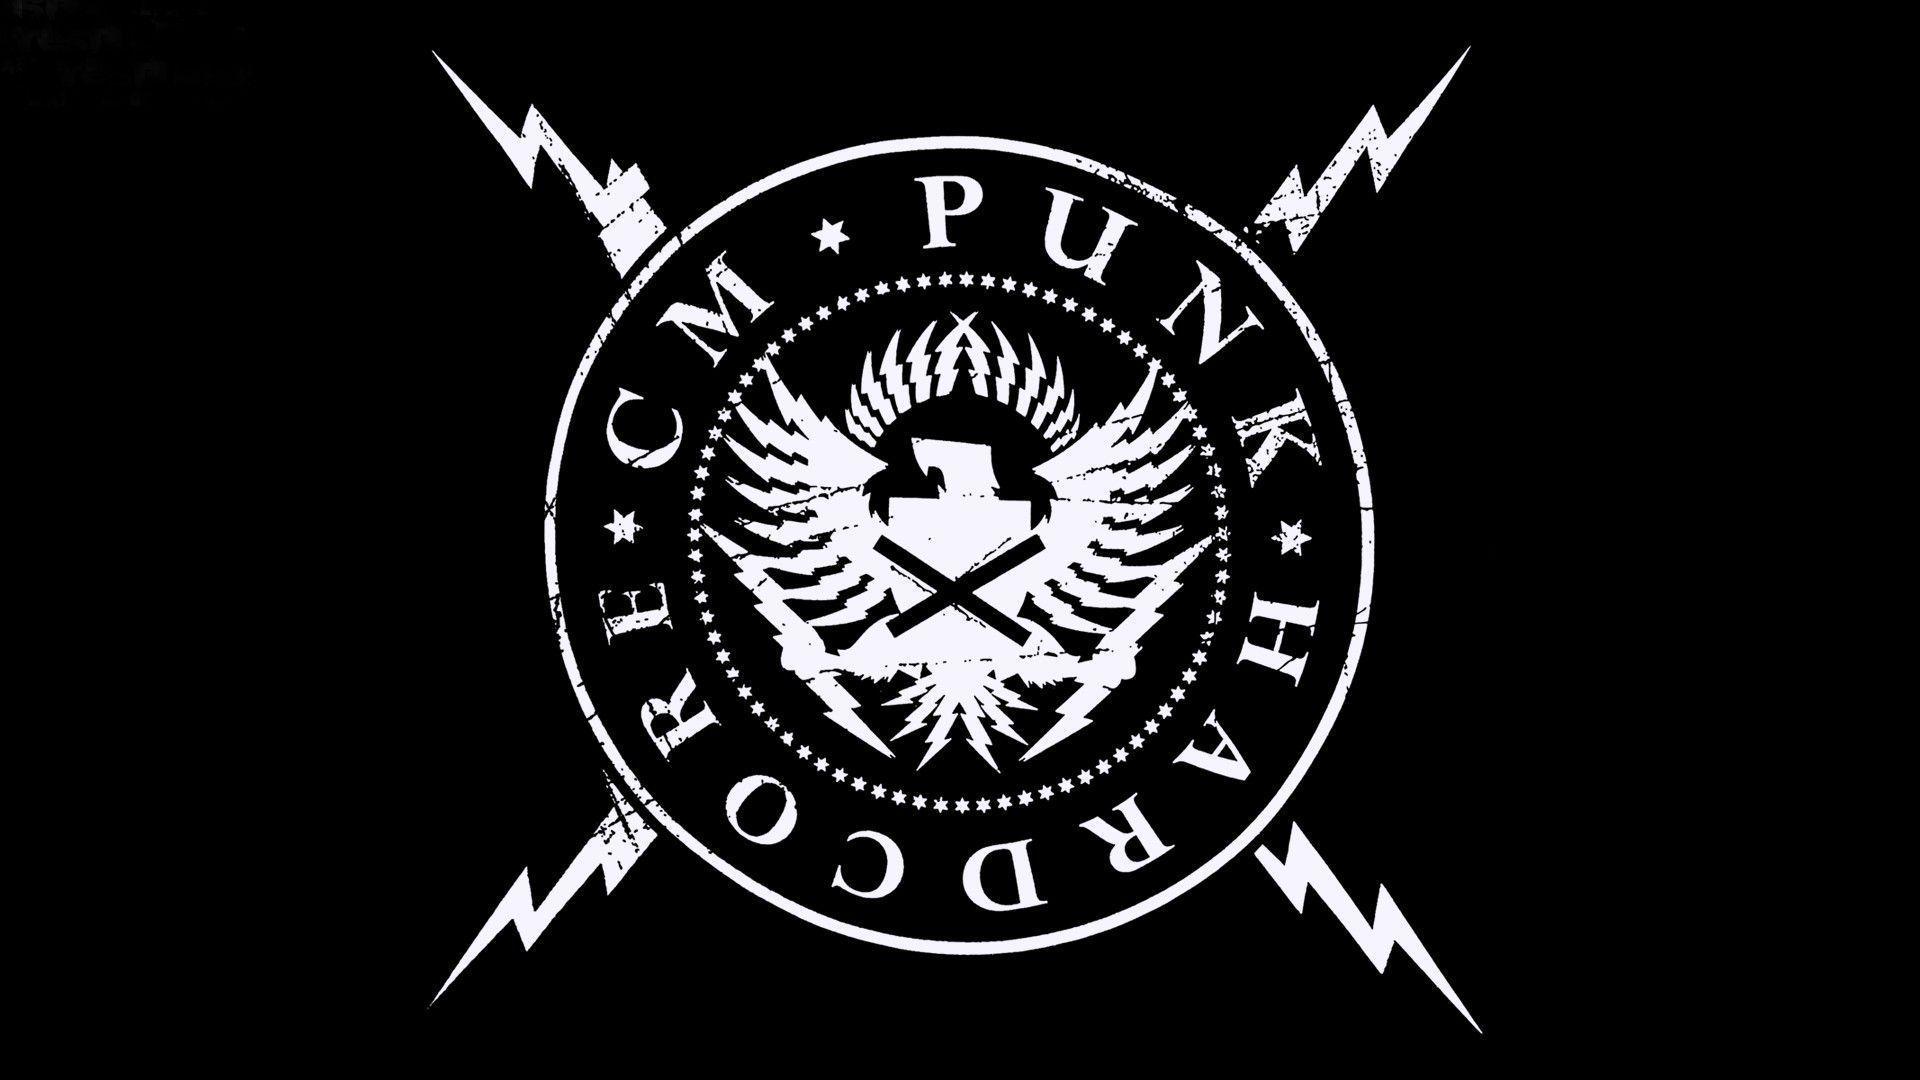 Cm Punk Wallpaper Free Download